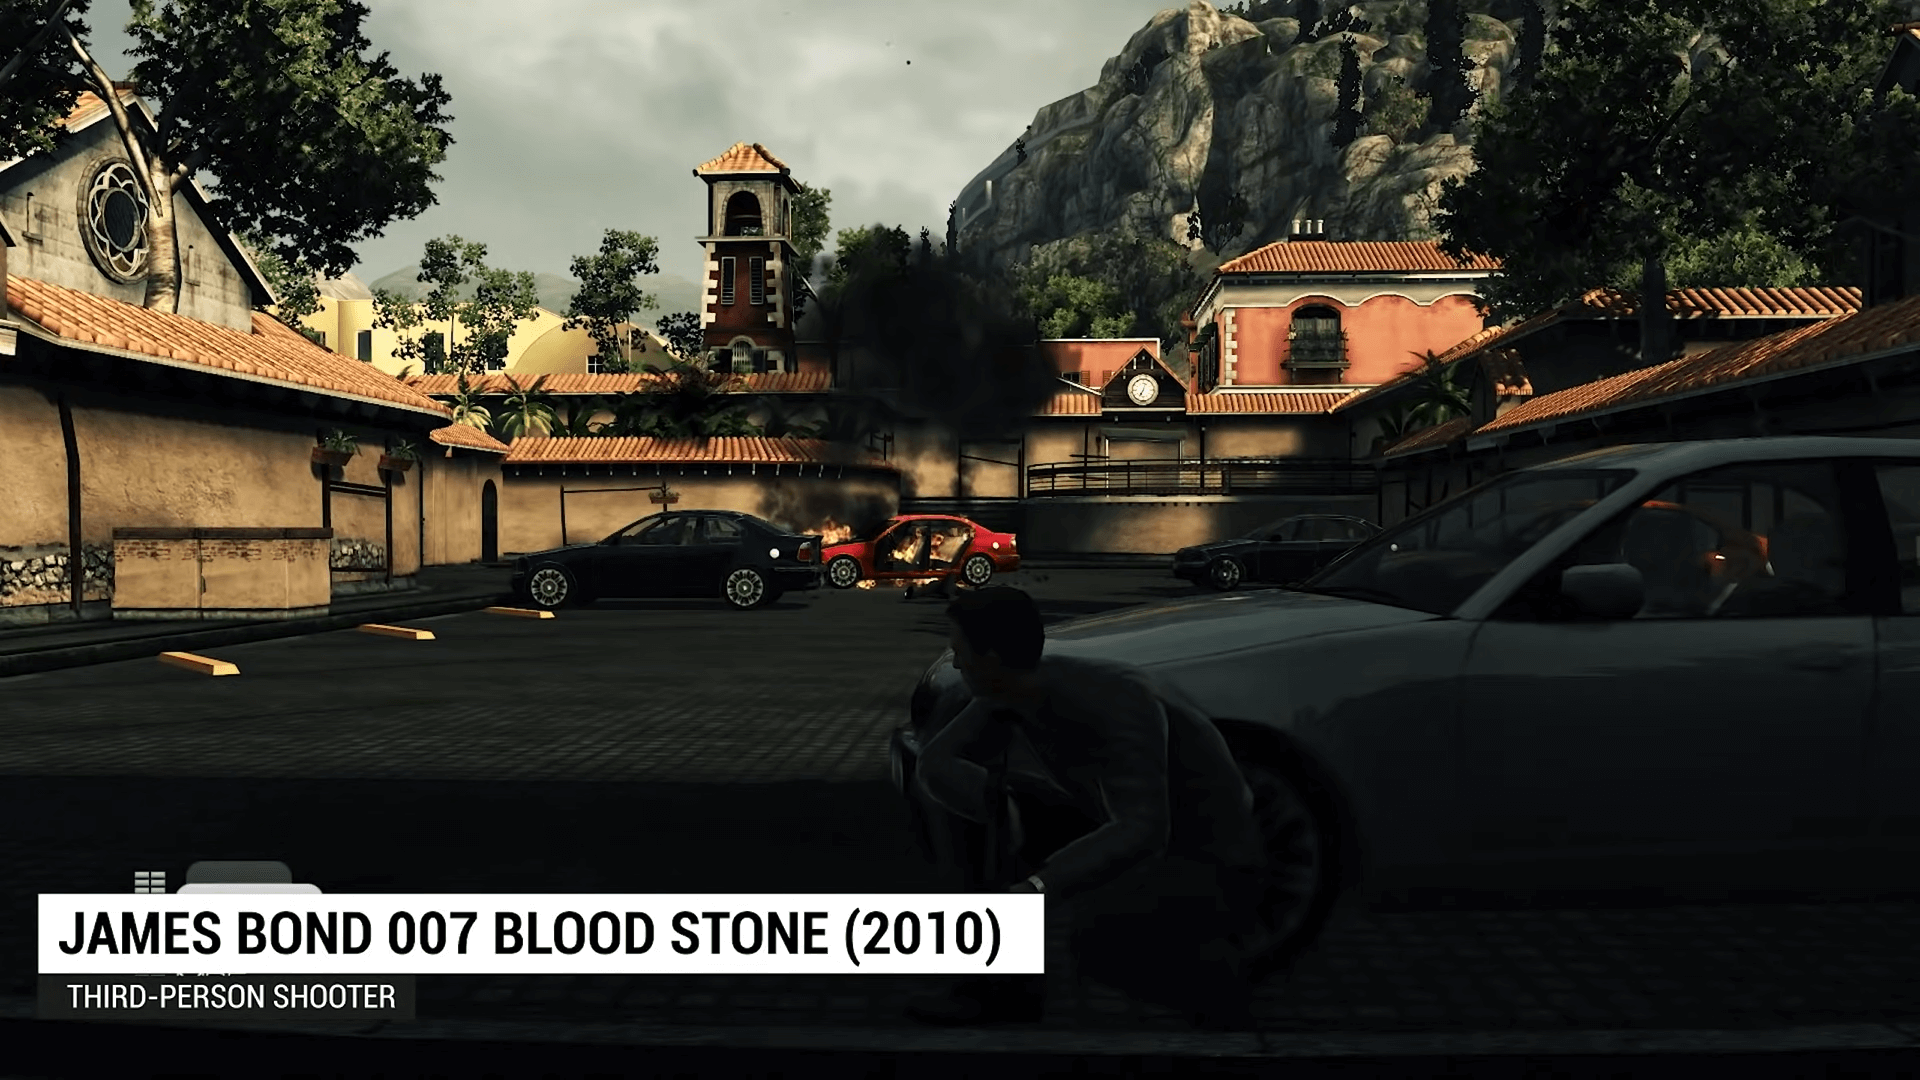 James Bond 007 Blood Stone (2010)